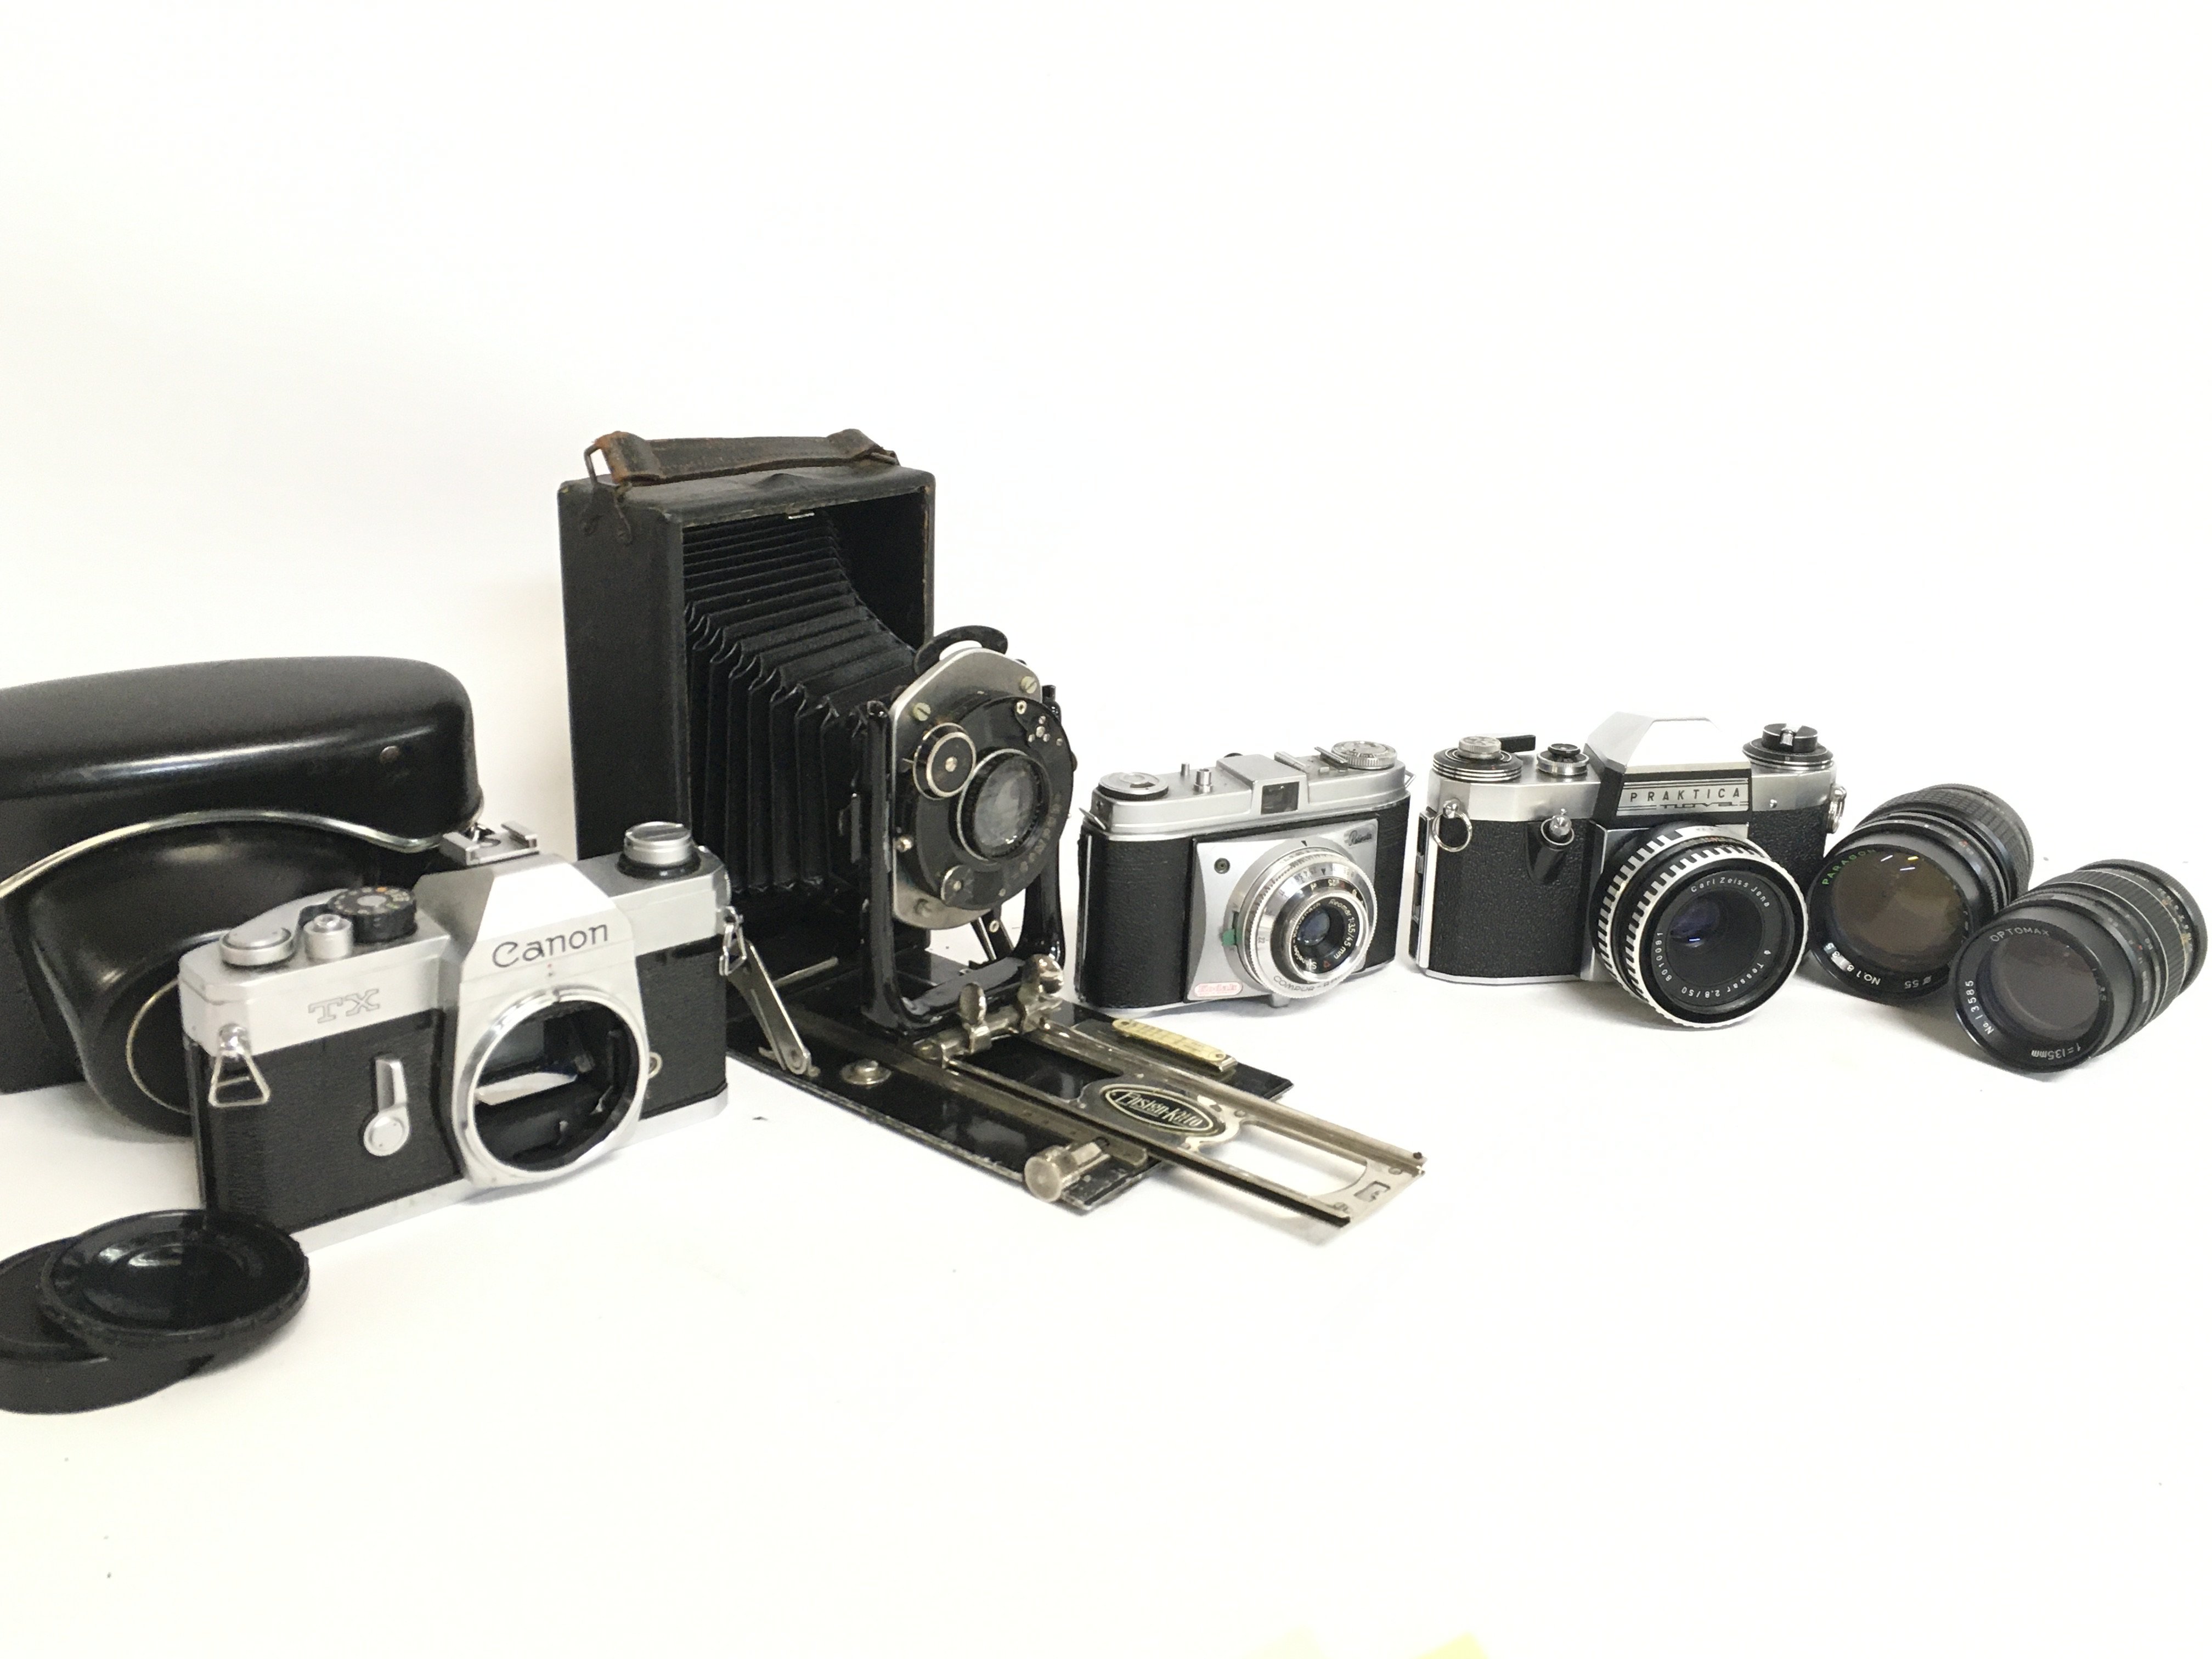 A collection of various cameras including a Canon